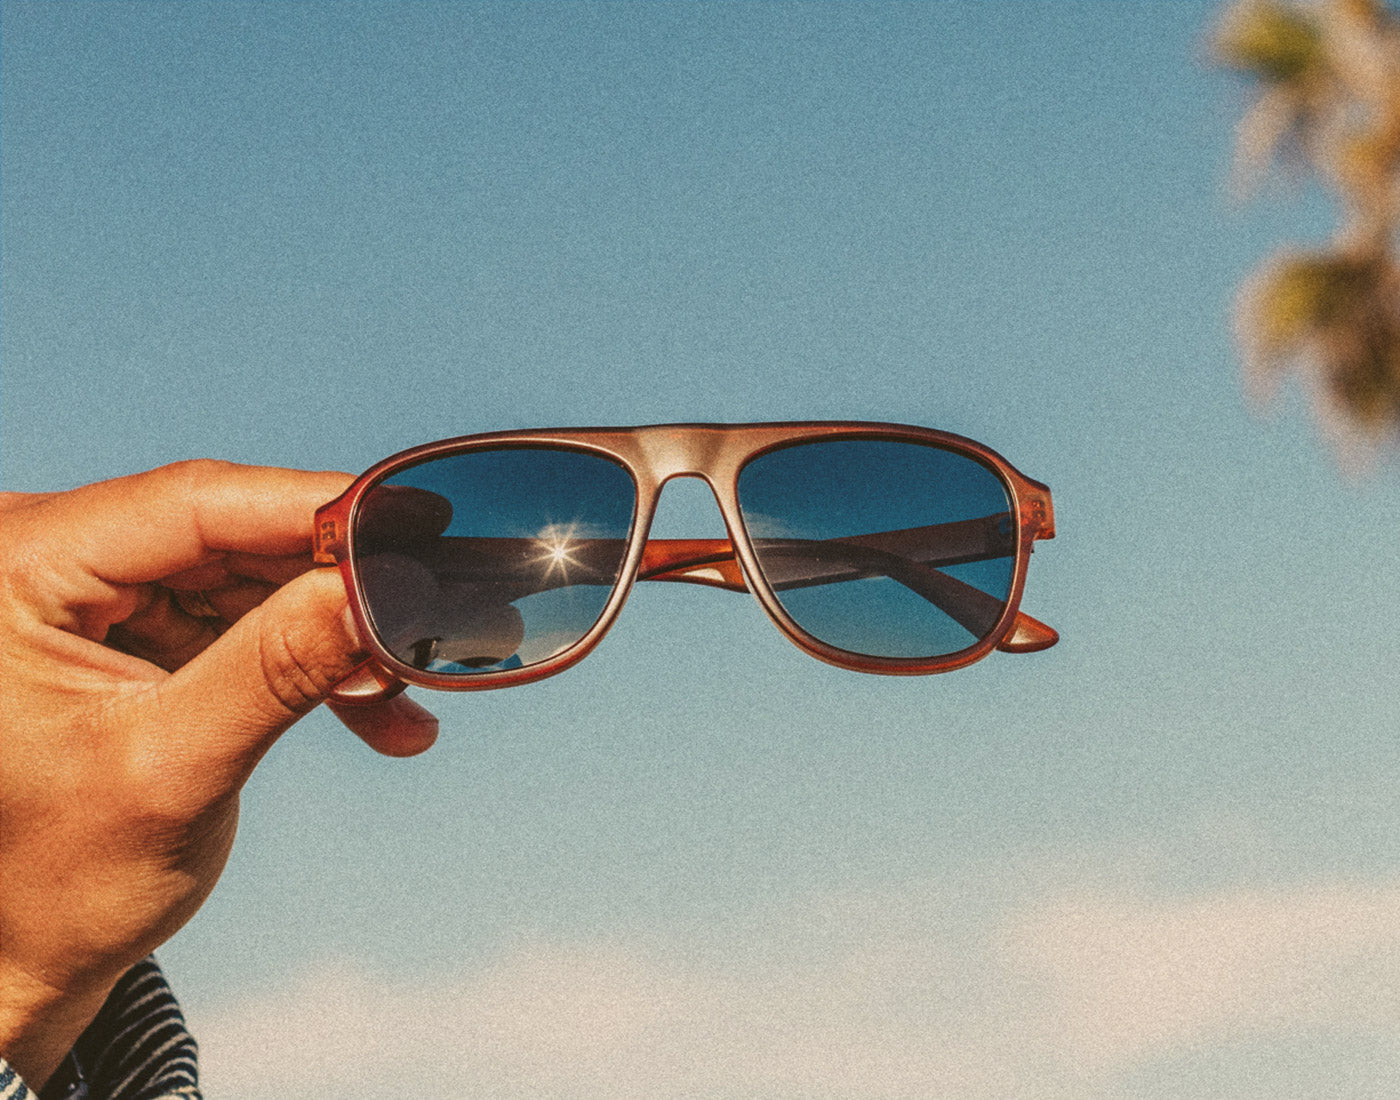 Sunski Shoreline Sunglasses review.